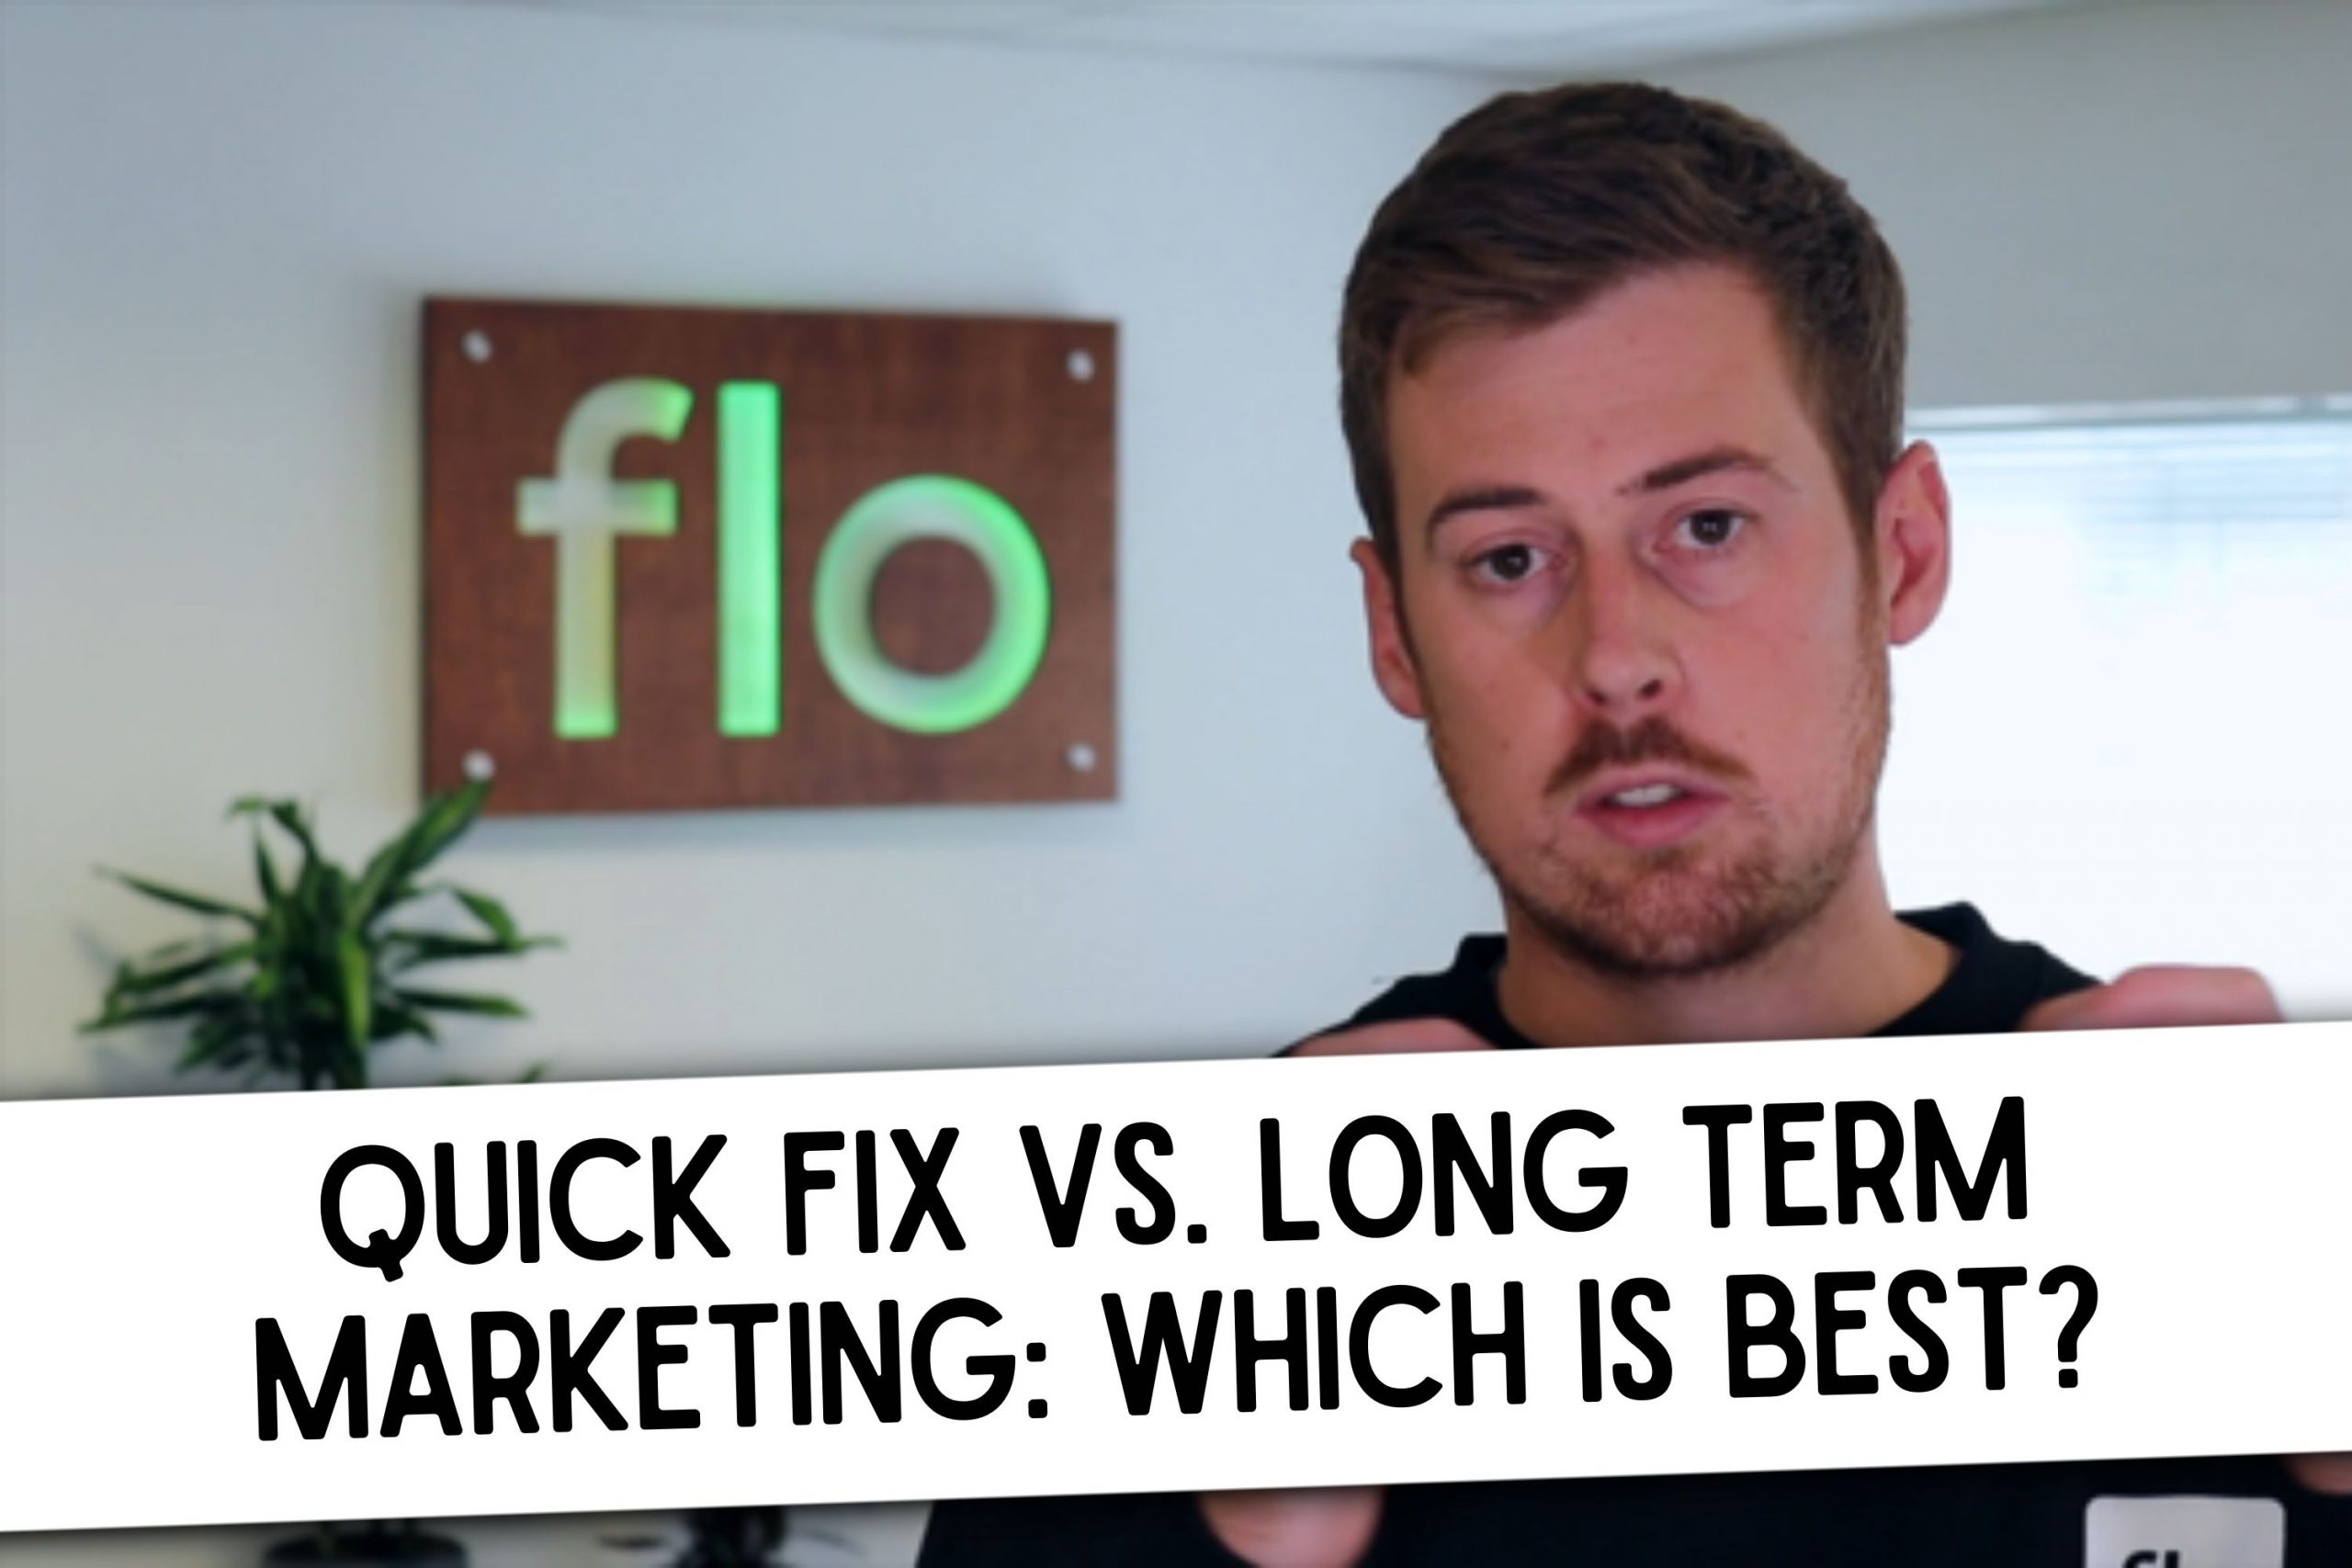 Quick fix vs long term marketing kitchen business